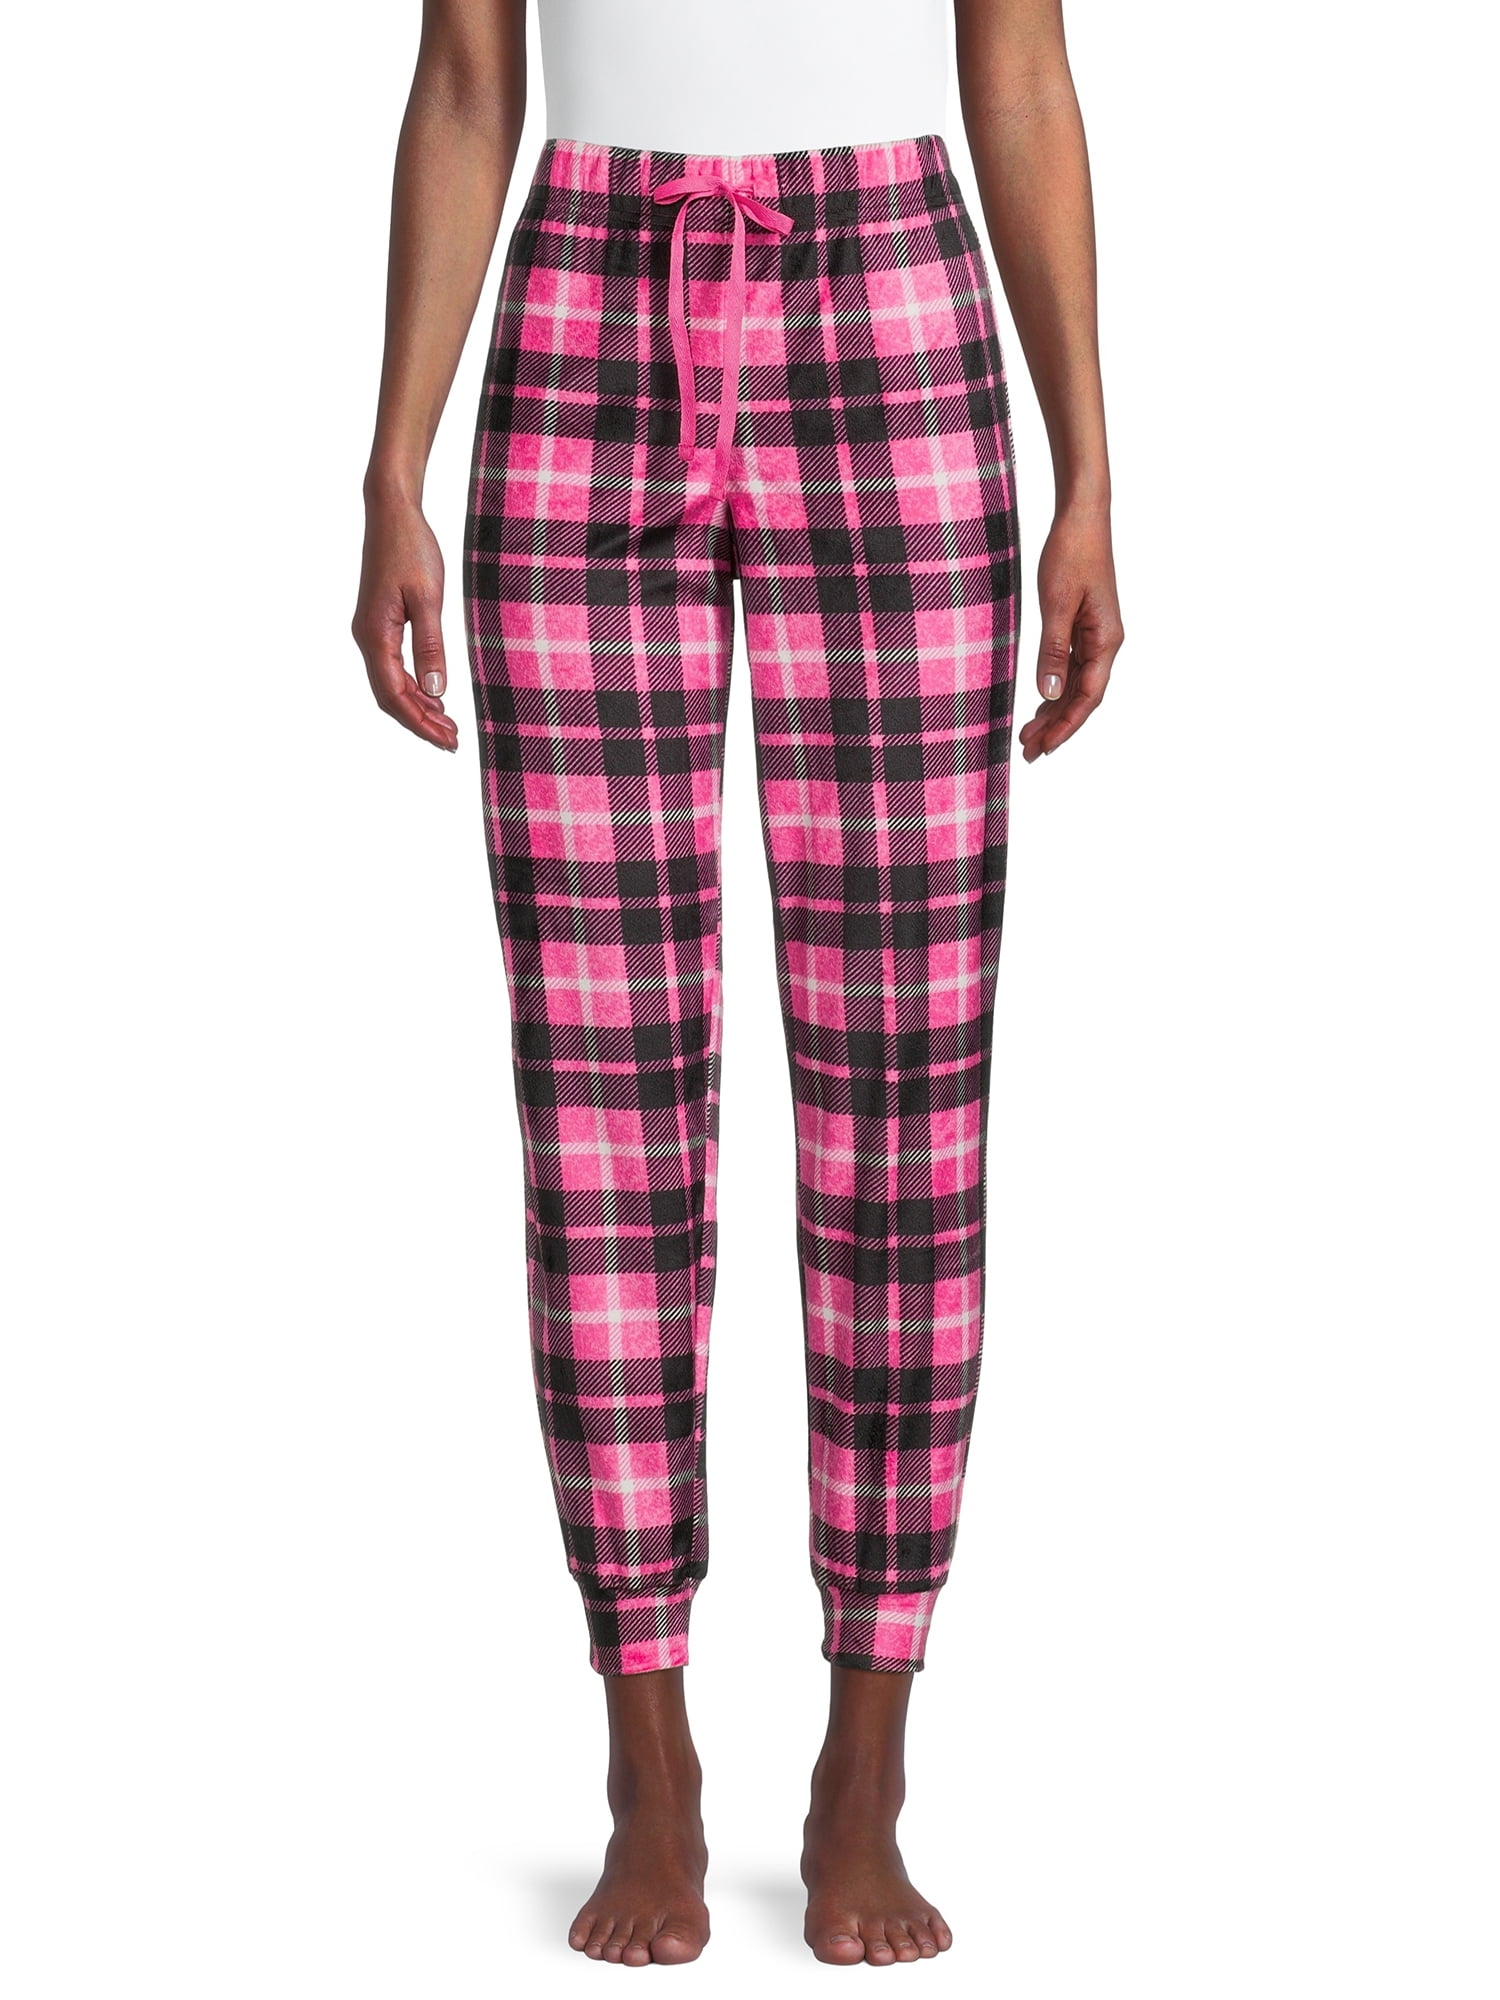 Just Love Plush Pajama Pants for Women - Petite to Plus Size Sleepwear  (Black - Leaf, 3X) - Walmart.com